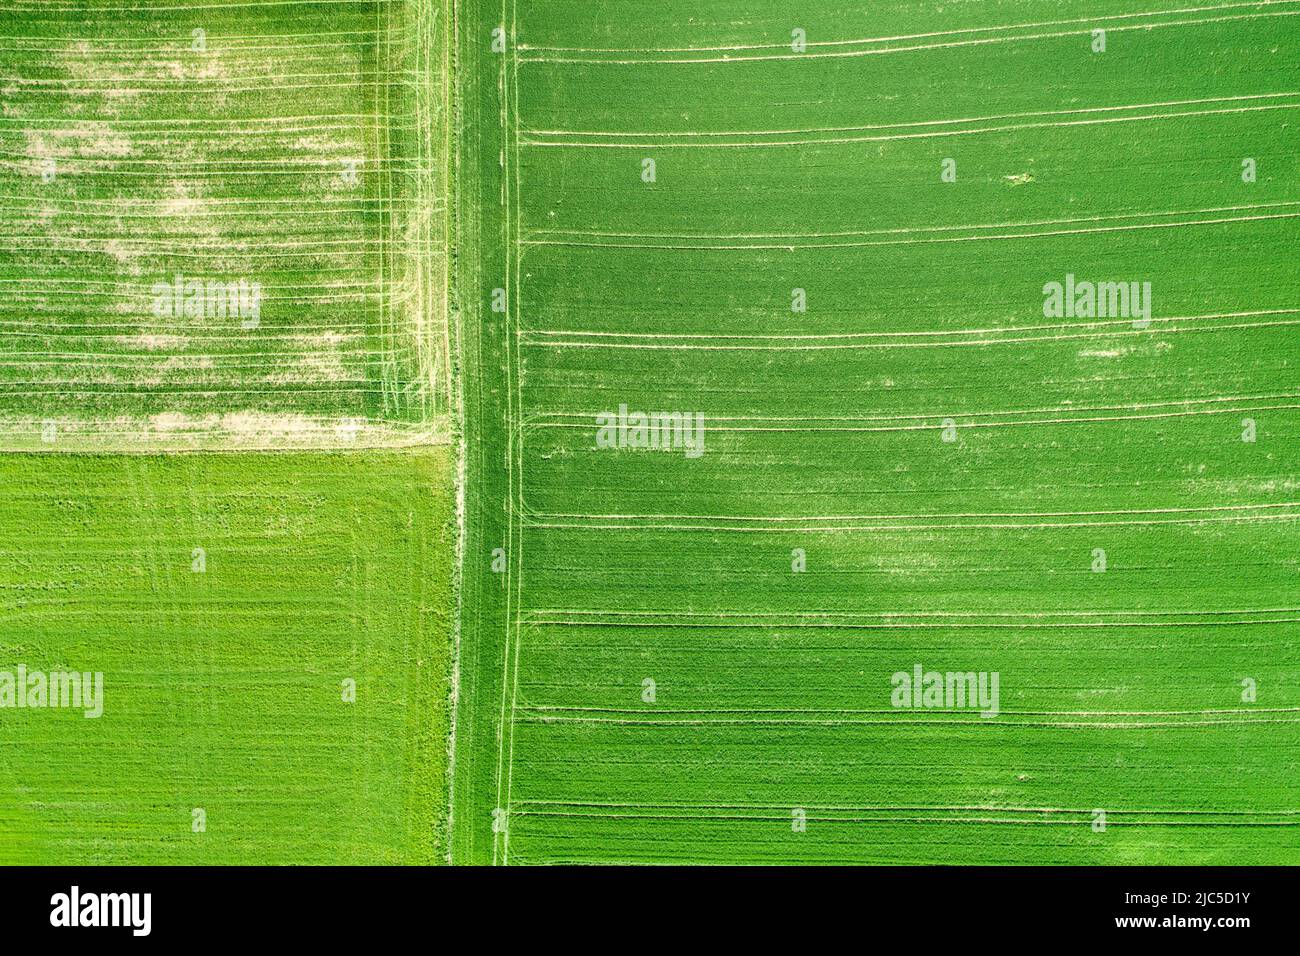 Luftuafnahme grüner Agrarlandschaft im Frühling, Zücher Oberland, Schweiz *** Local Caption ***  Agrarian, agrarian scenery, cultivation, drone admiss Stock Photo